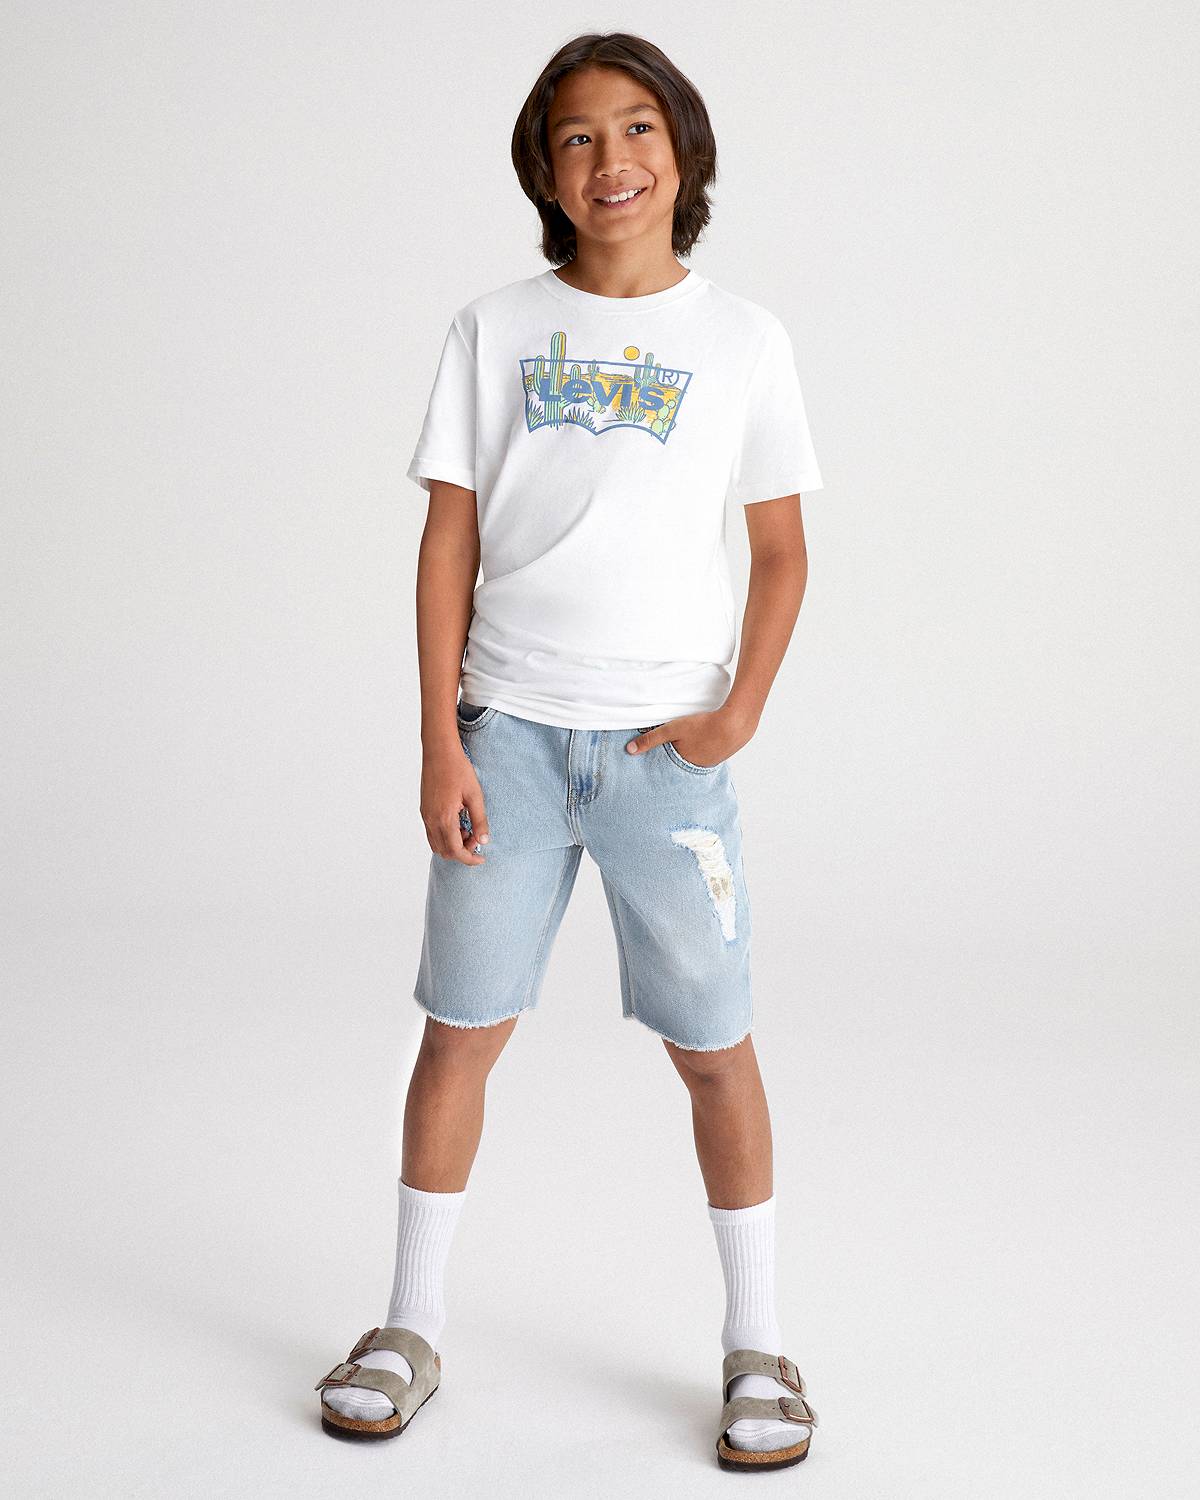 Little Levi's 565 Brown Denim Jeans Youth Boys Size 7 Orange Tab 21x19 USA  Made